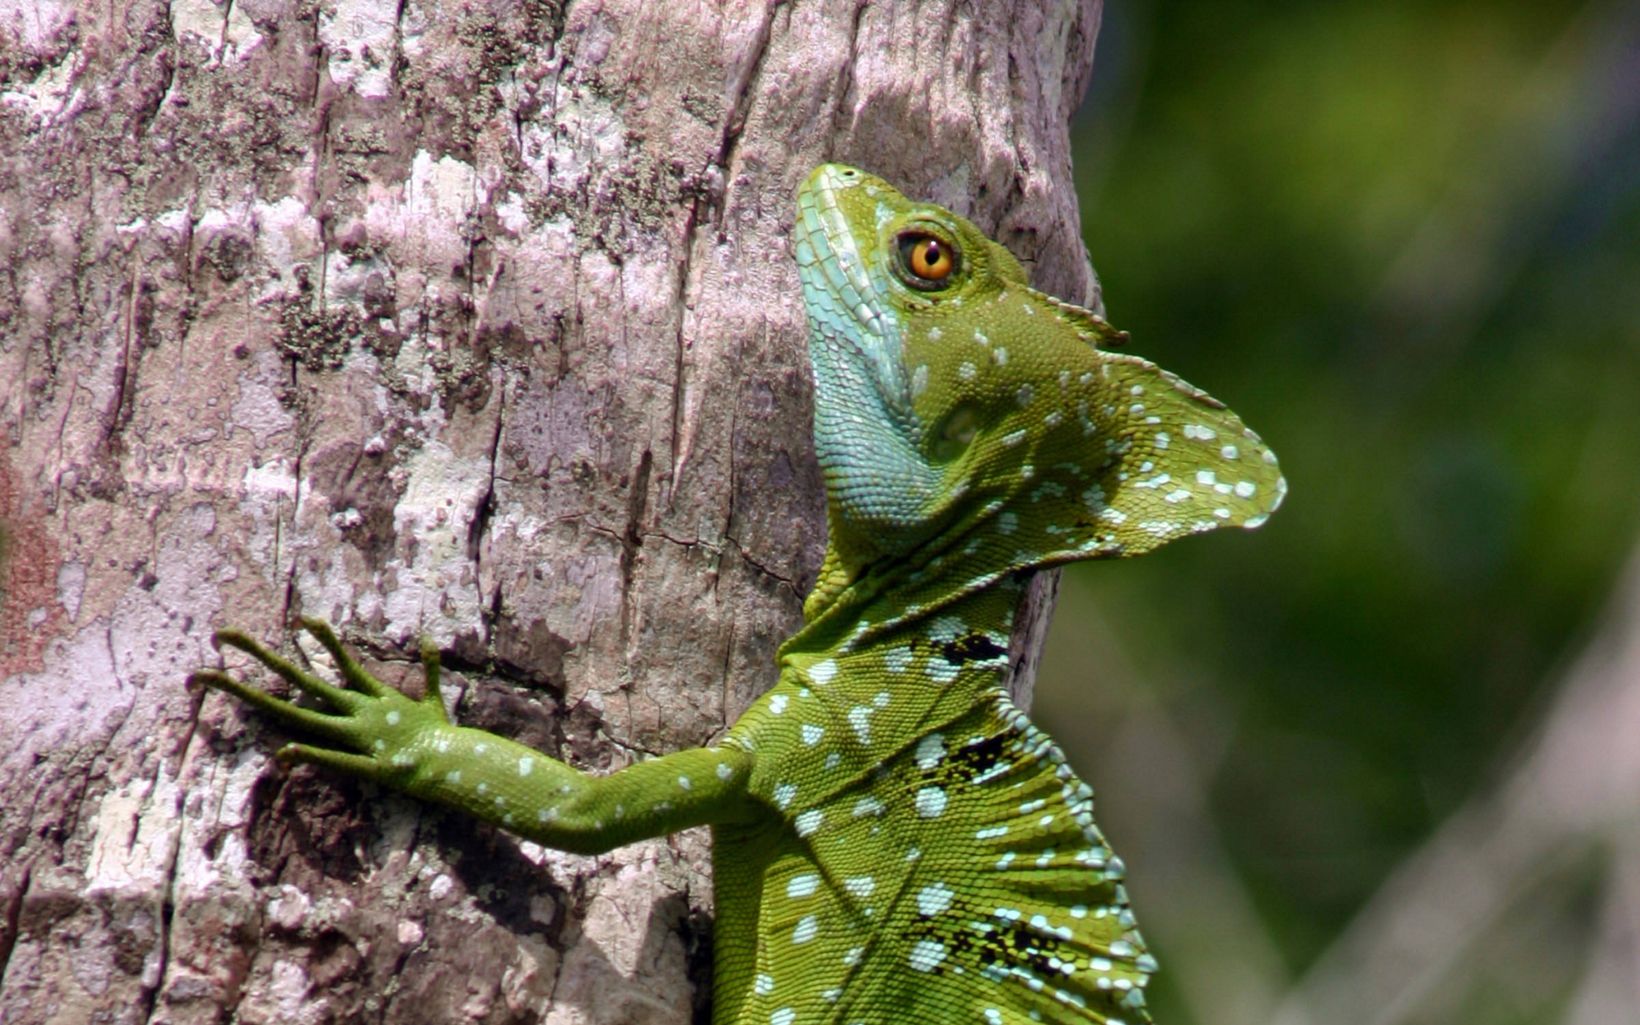 Green basilisk lizard A polka dotted, green basilisk lizard clings to a tree trunk in the Rio San Juan area of Nicaragua.   © Nestor Windevoxhel/TNC